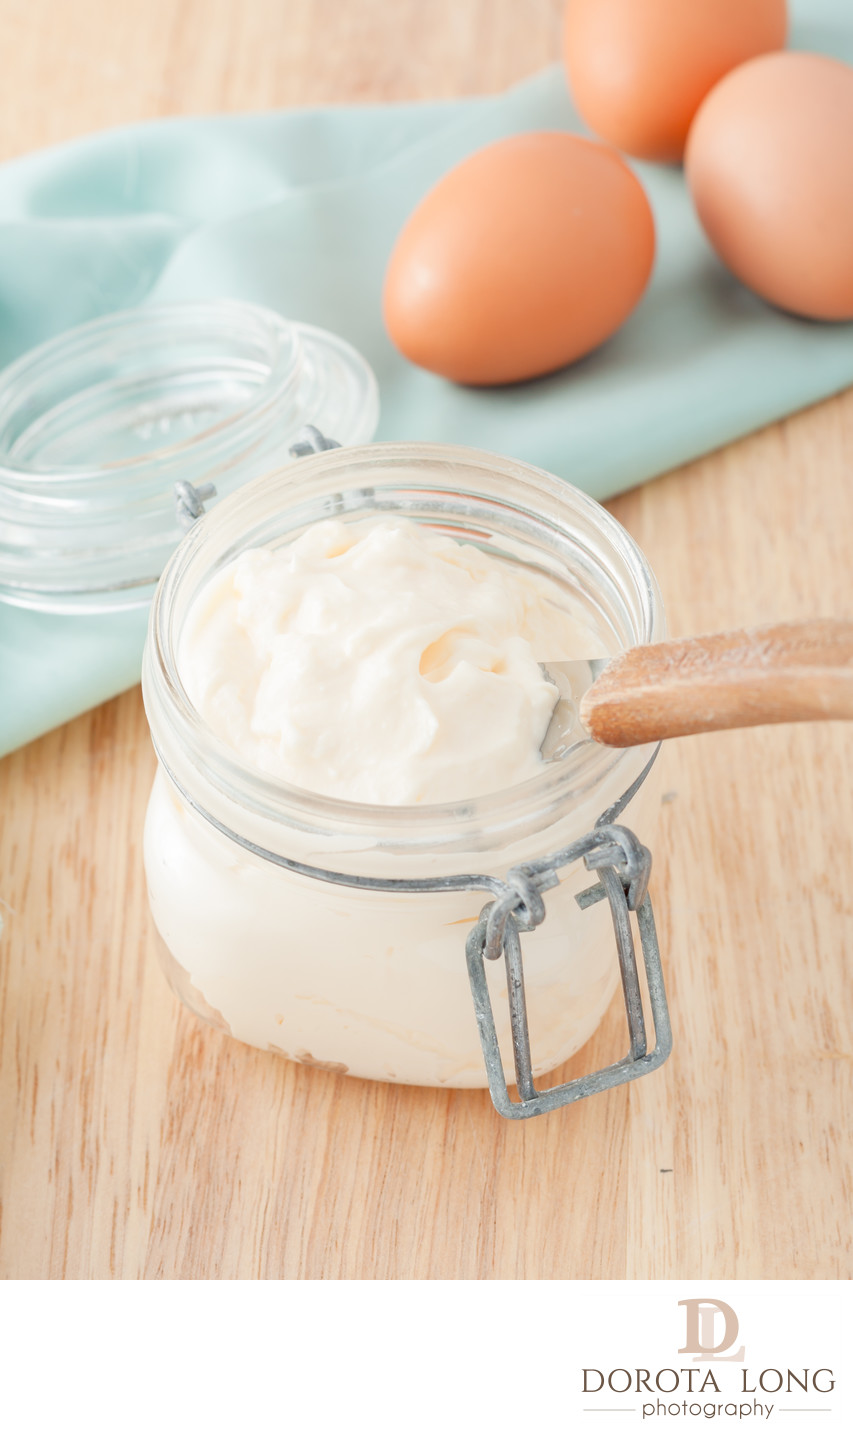 mayonnaise in glass jar